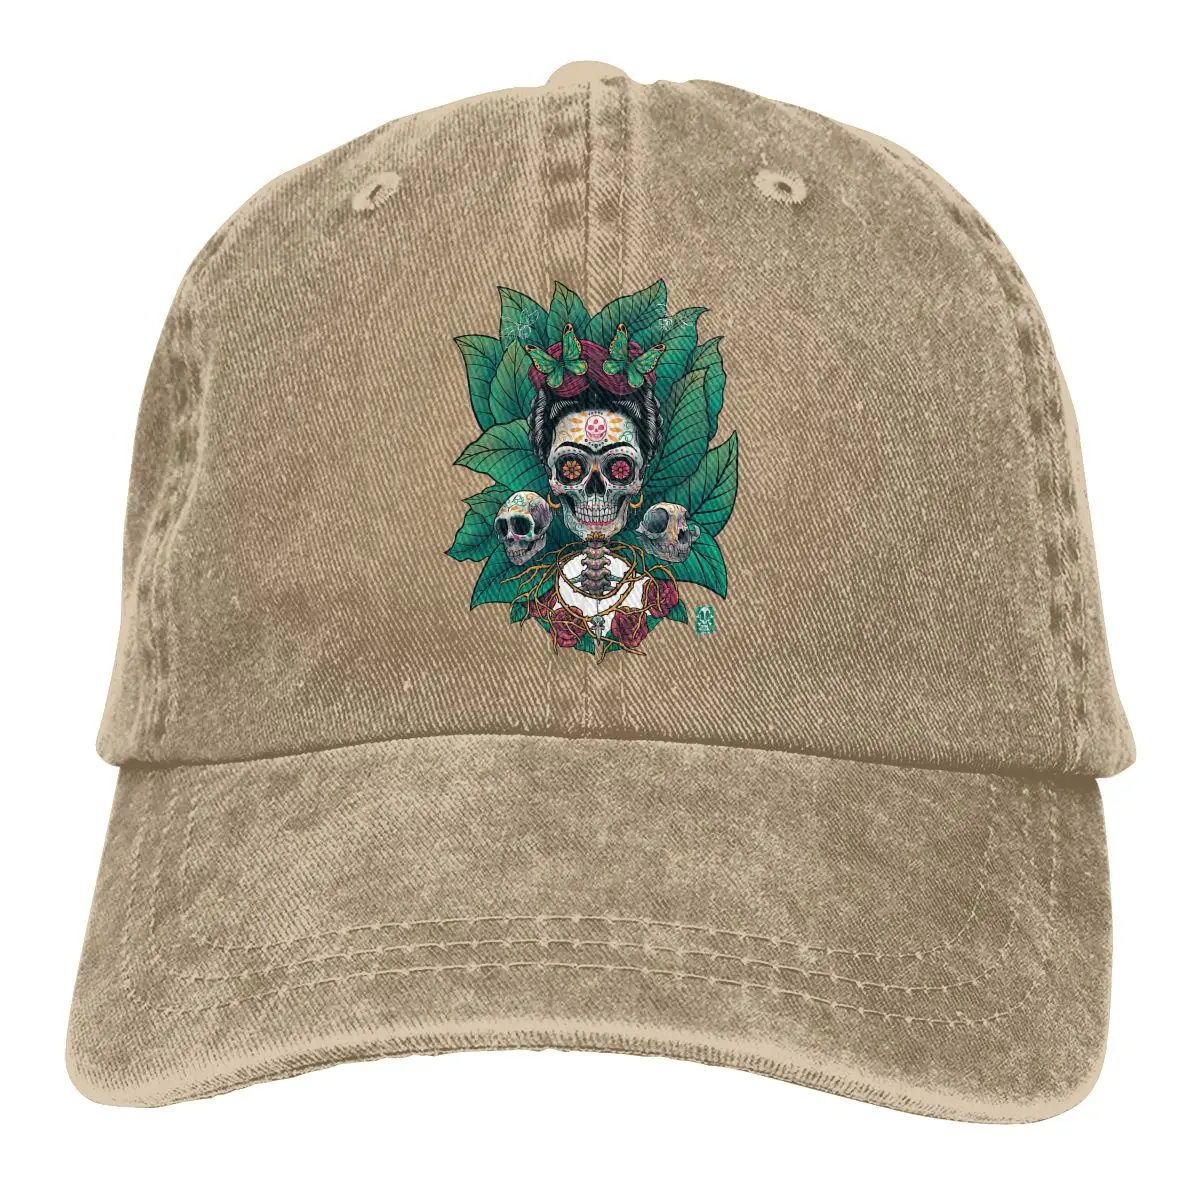 

Ay Fridita - Day Of The Dead The Baseball Cap Peaked capt Sport Unisex Outdoor Custom Mexico Skull Sugar Hats